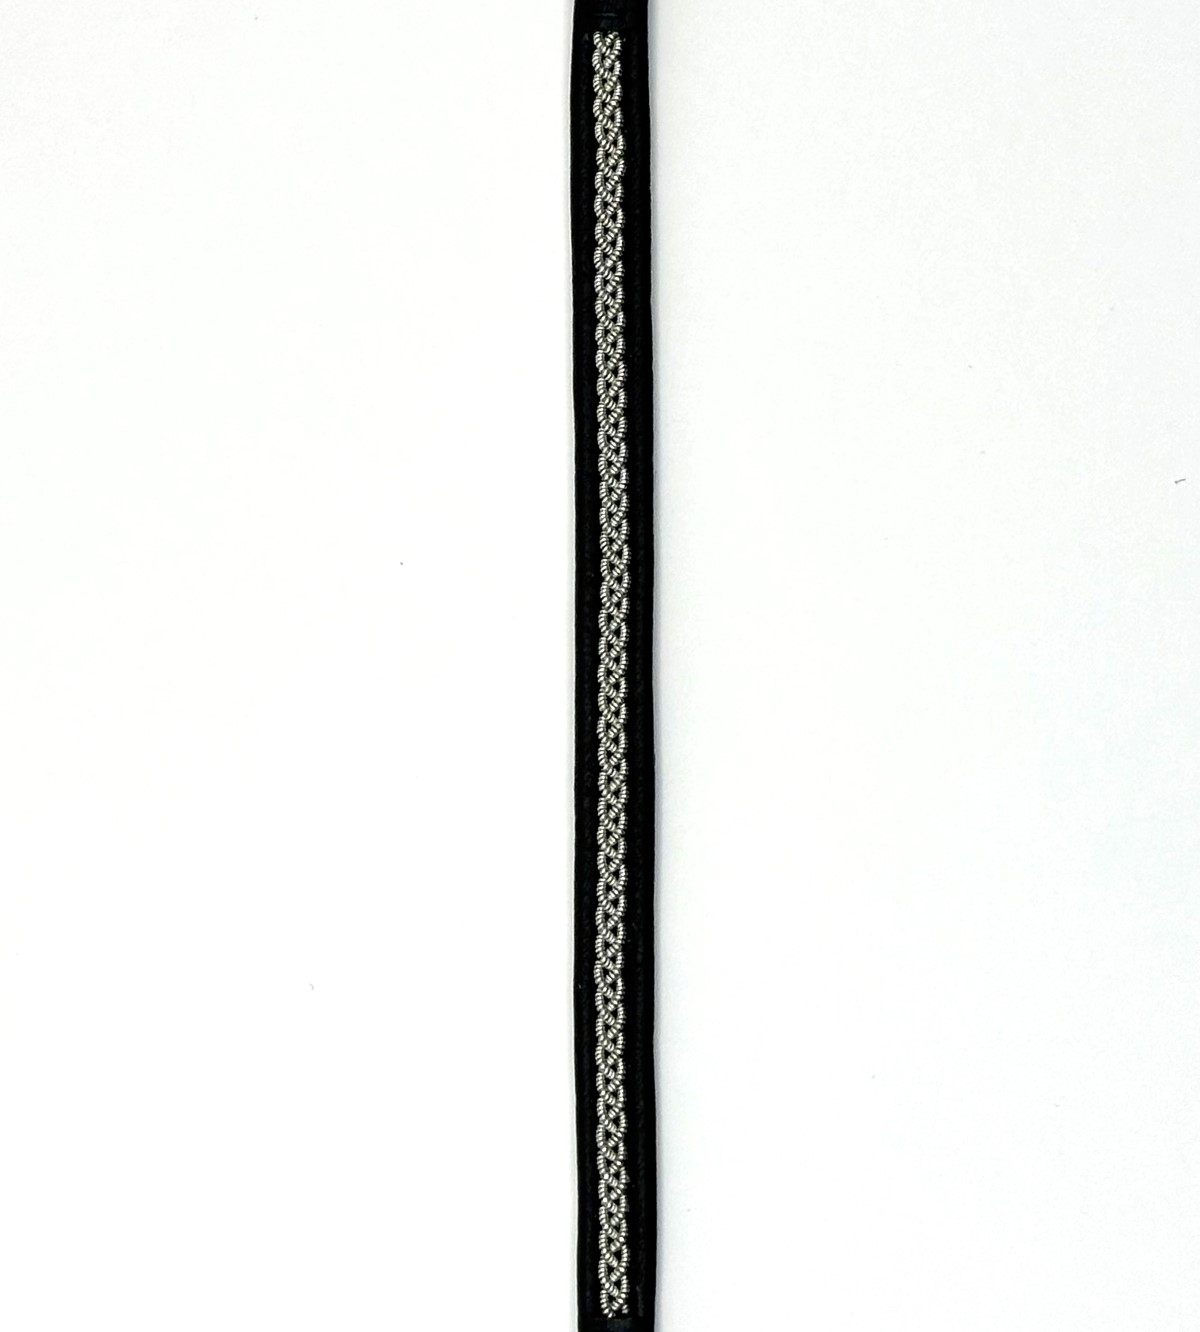 Frontansicht des Artikels saami crafts Armband AZ001